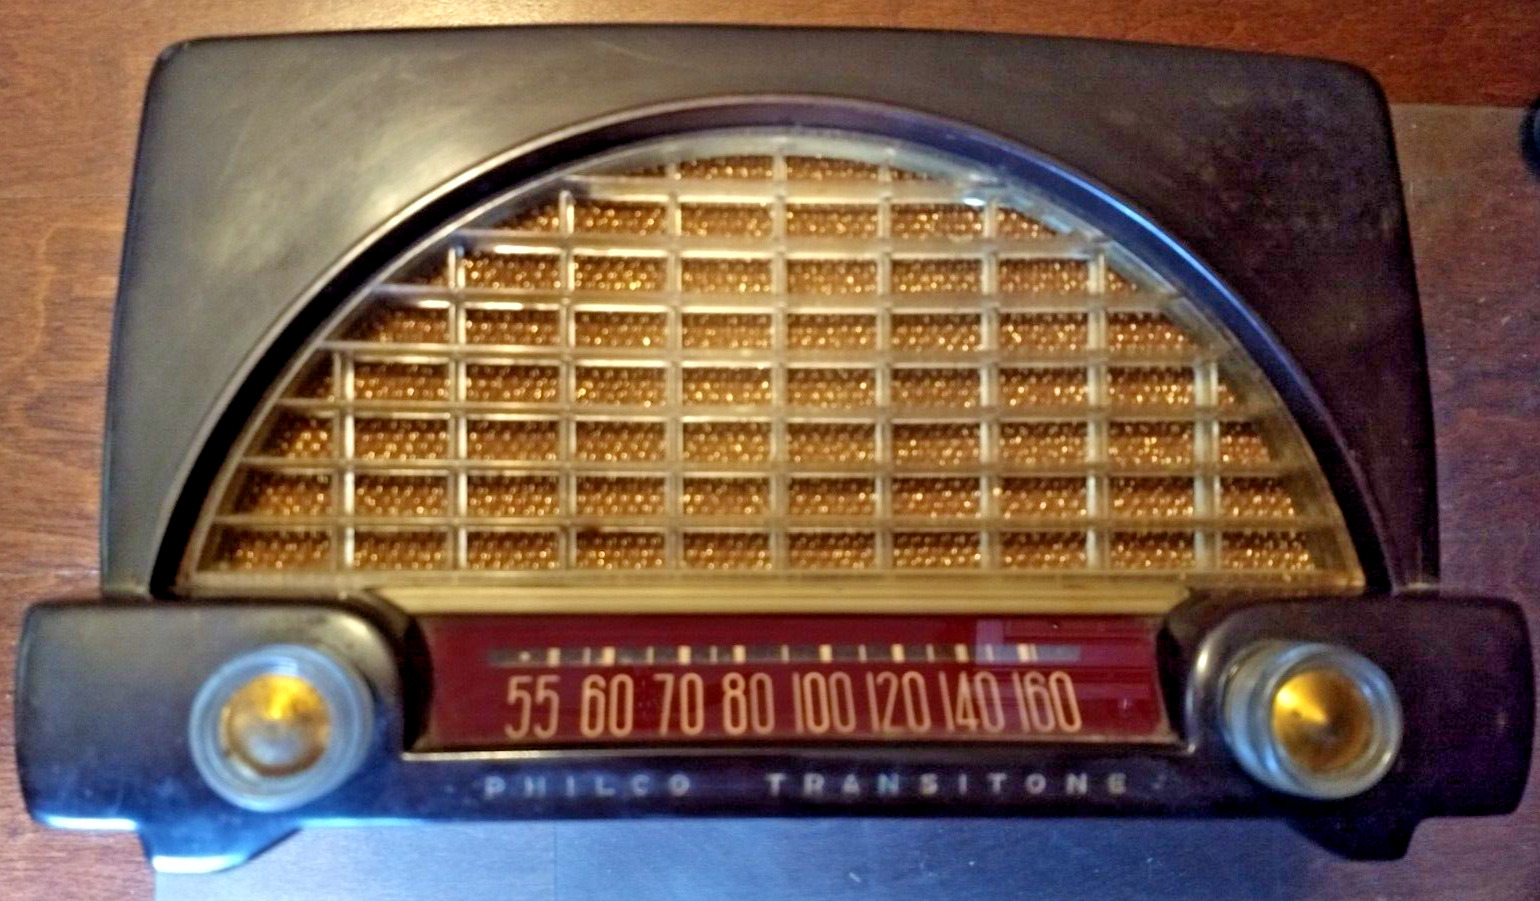 Philco Transitone 5 Tube Radio 51-532 Bakelite Cabinet Veg Antique 1950s AS IS